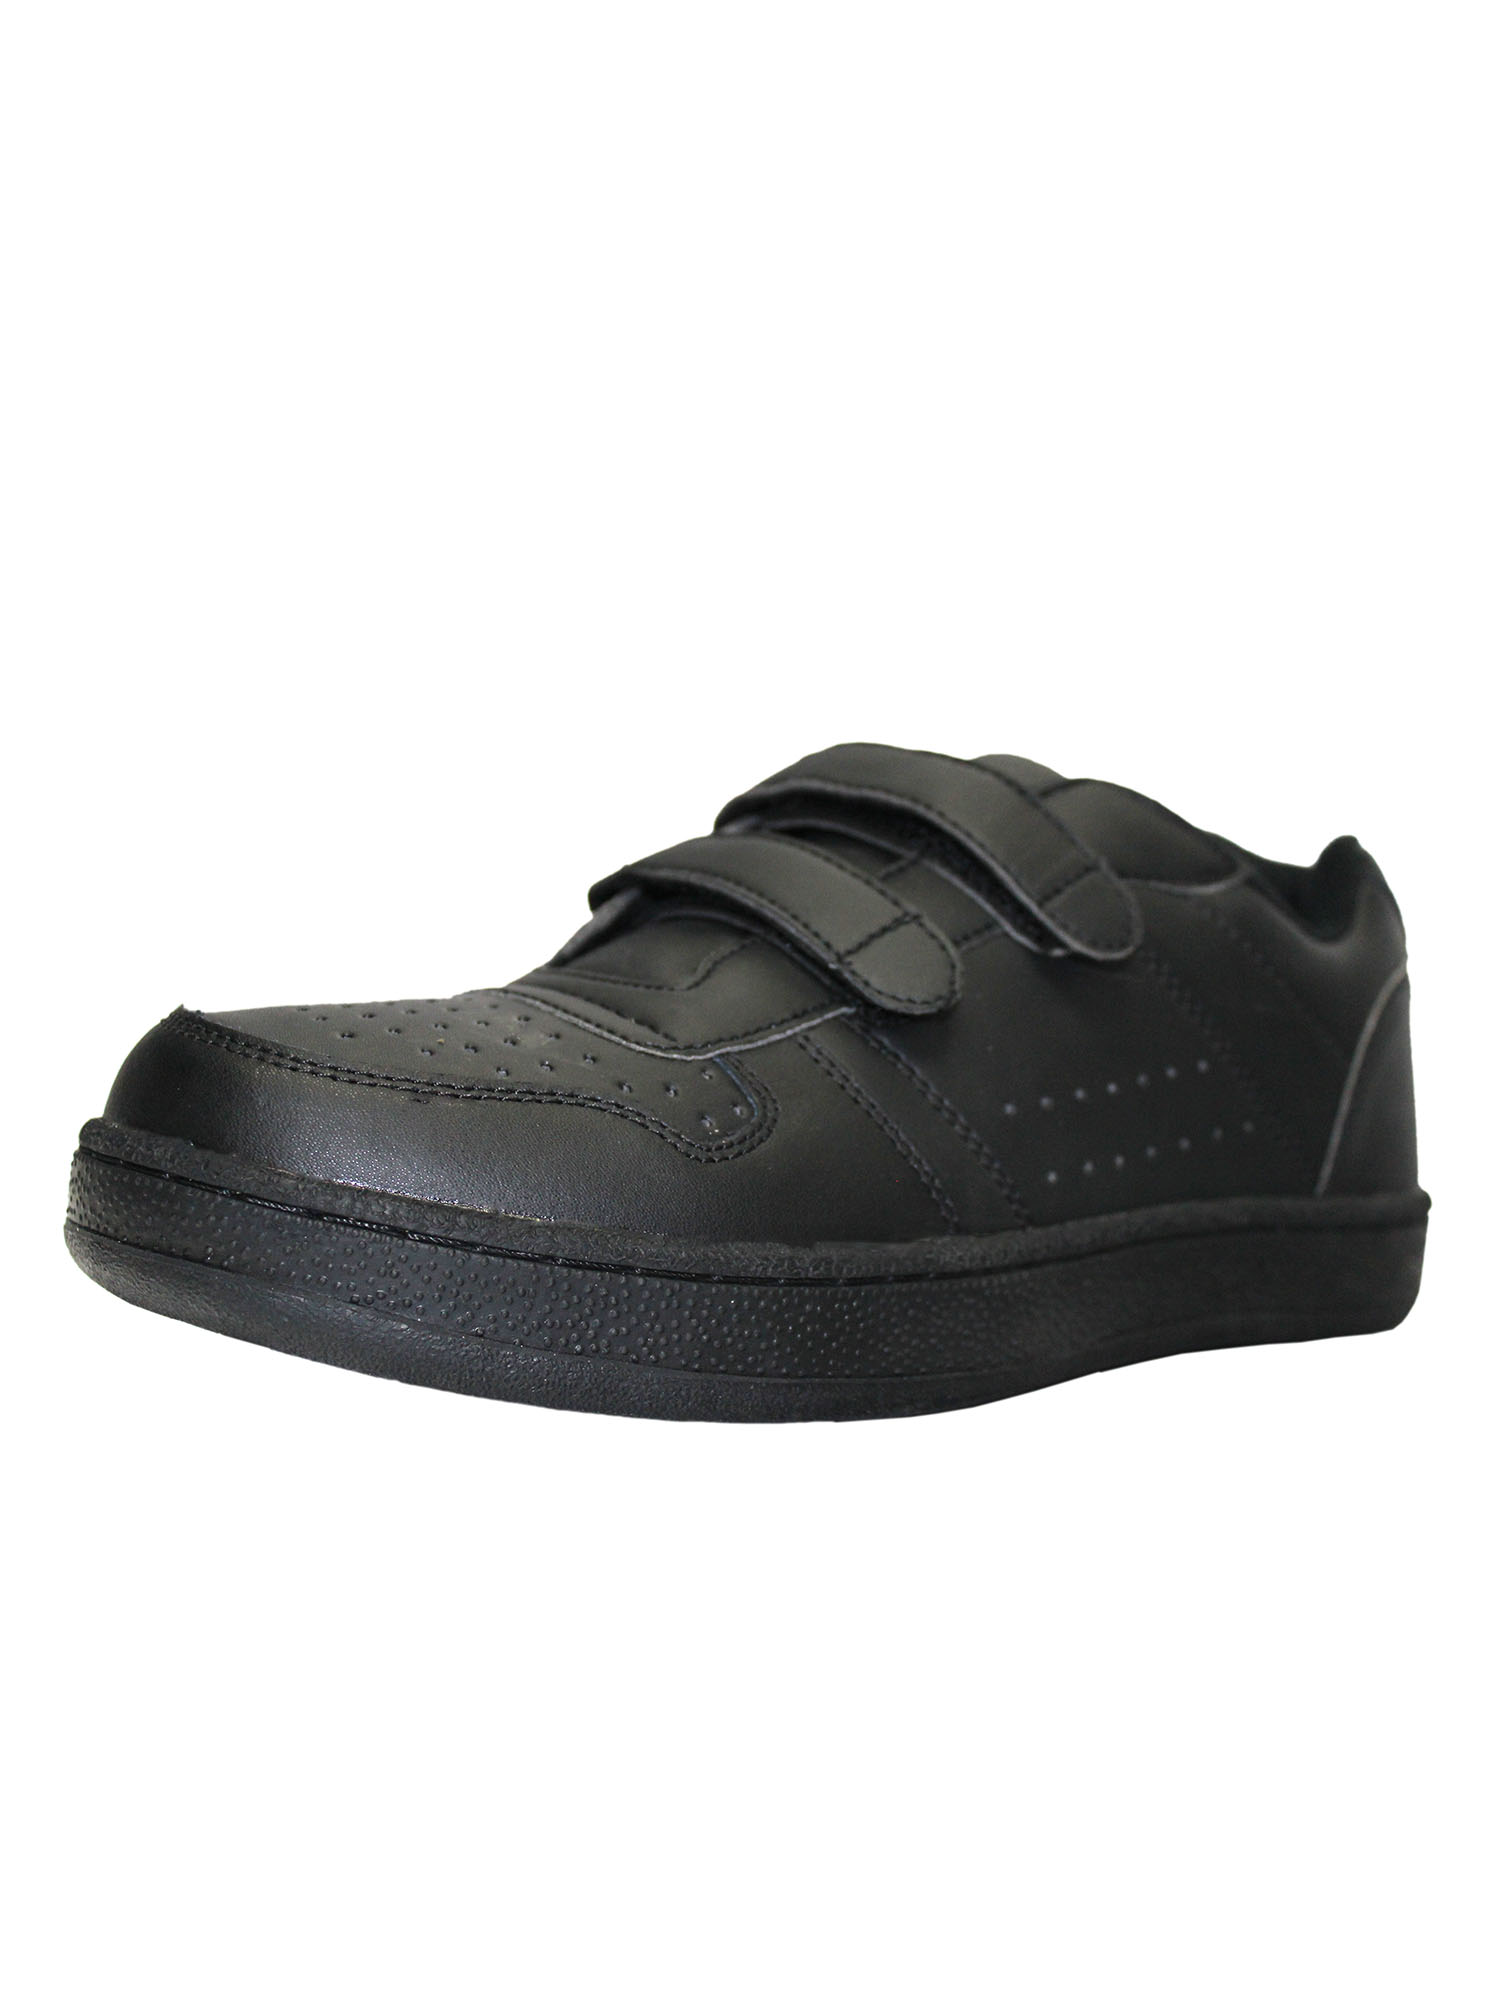 Tanleewa Men's Leather Strap Sneakers Lightweight Hook and Loop Walking Shoe Size 9.5 Adult Male - image 1 of 4